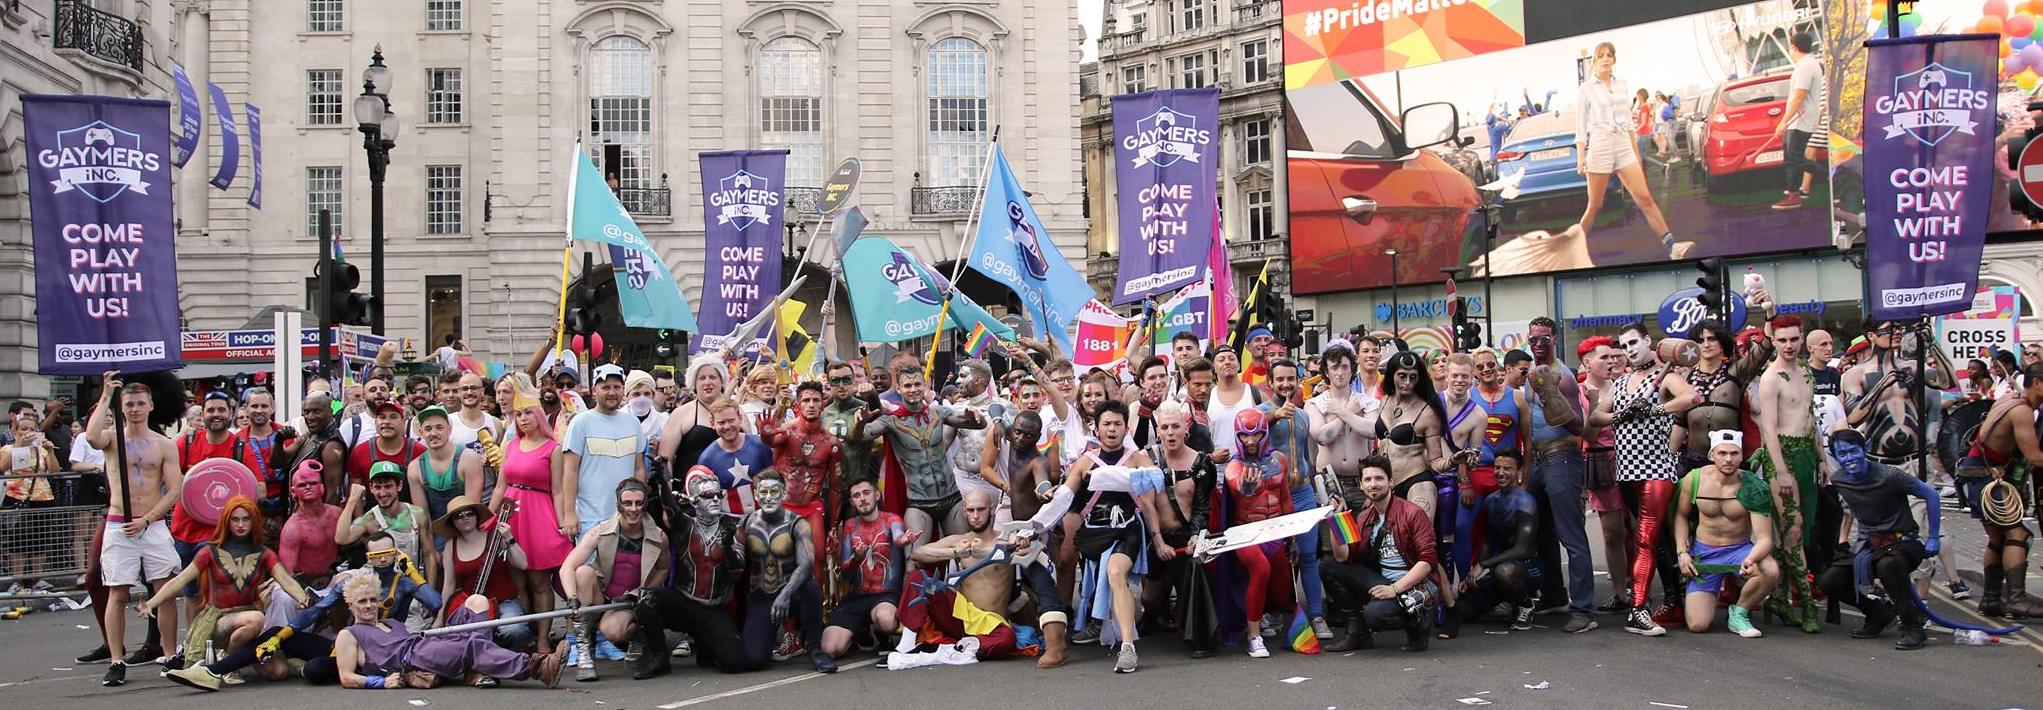 Group at Pride 2018